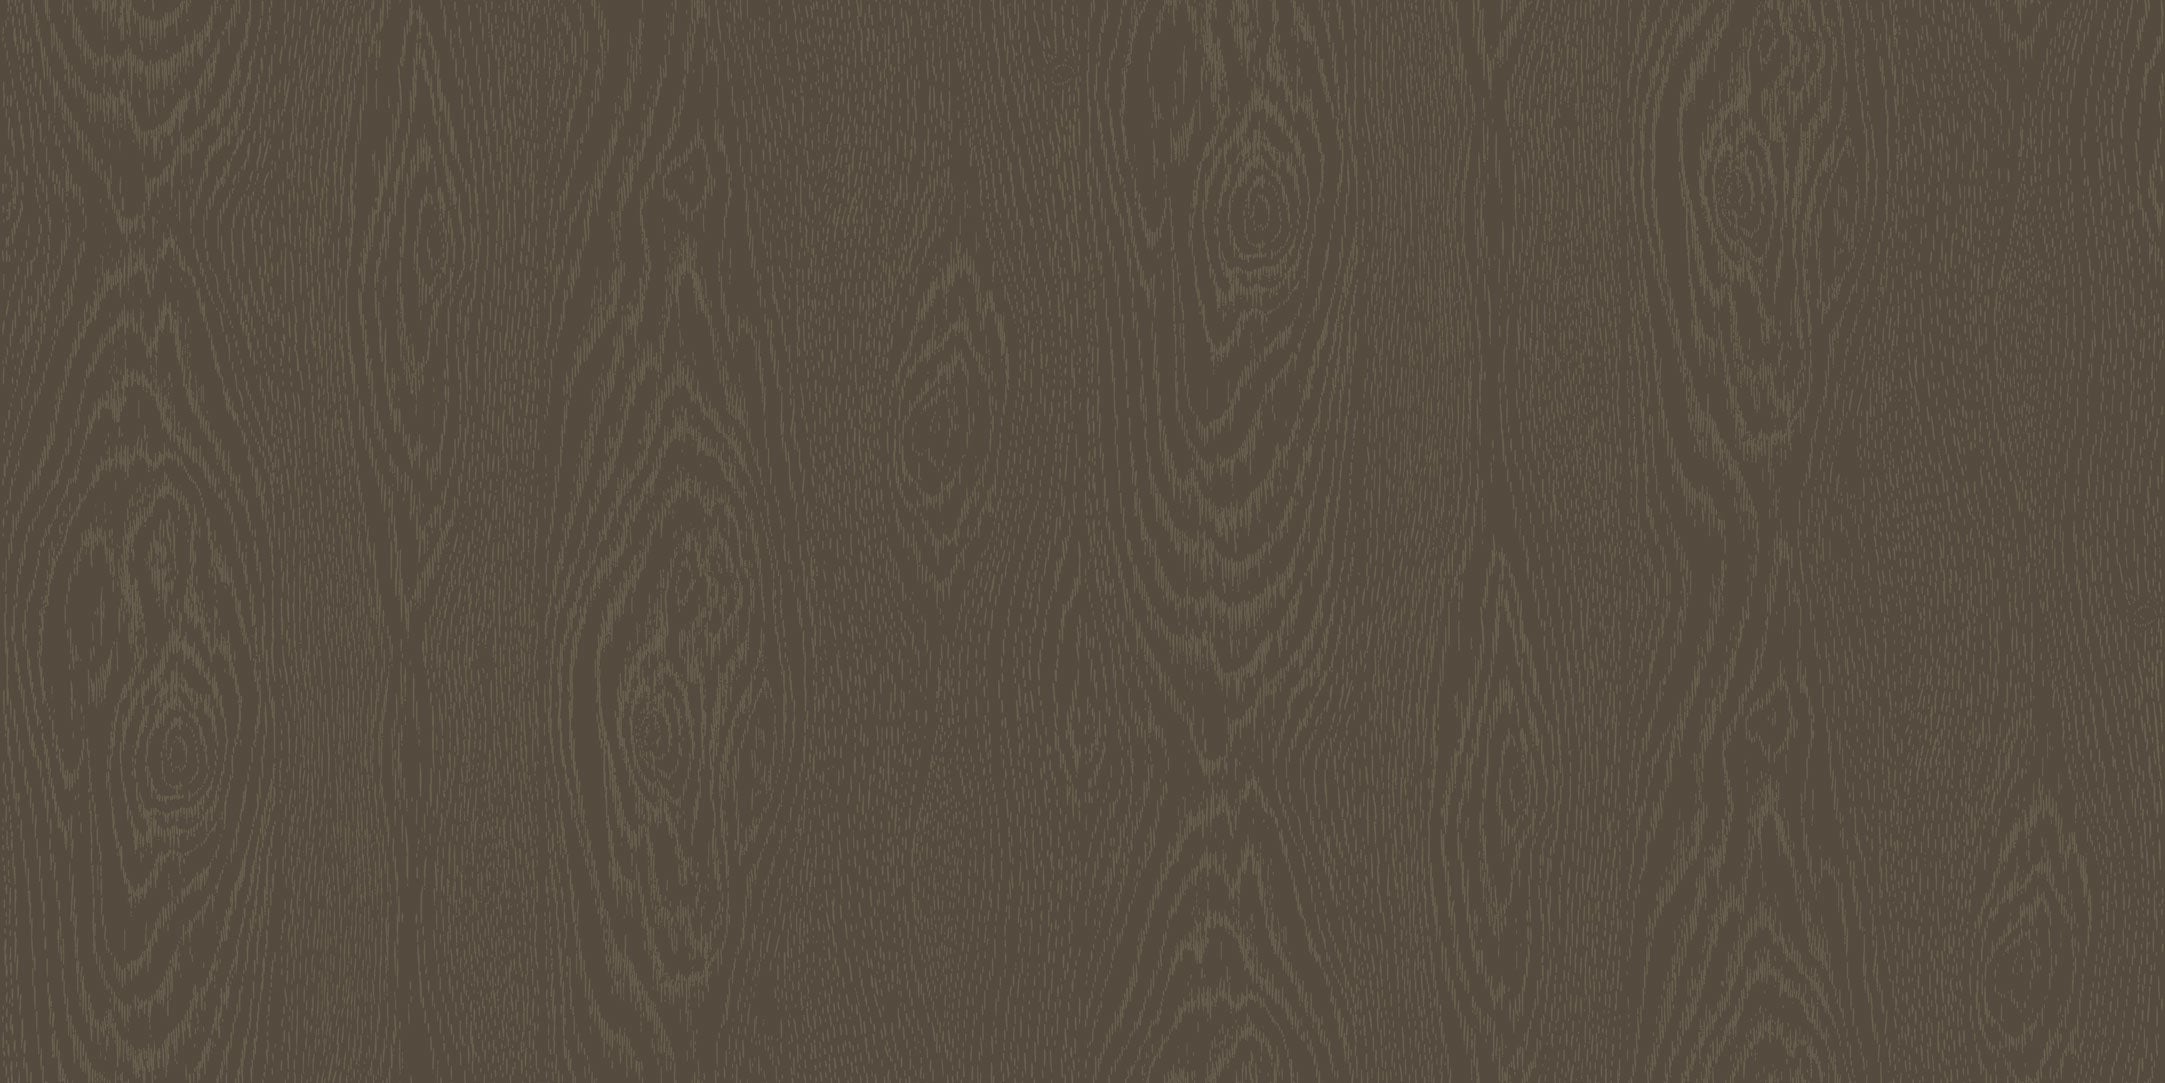 Foundation Wood Grain 92/5025